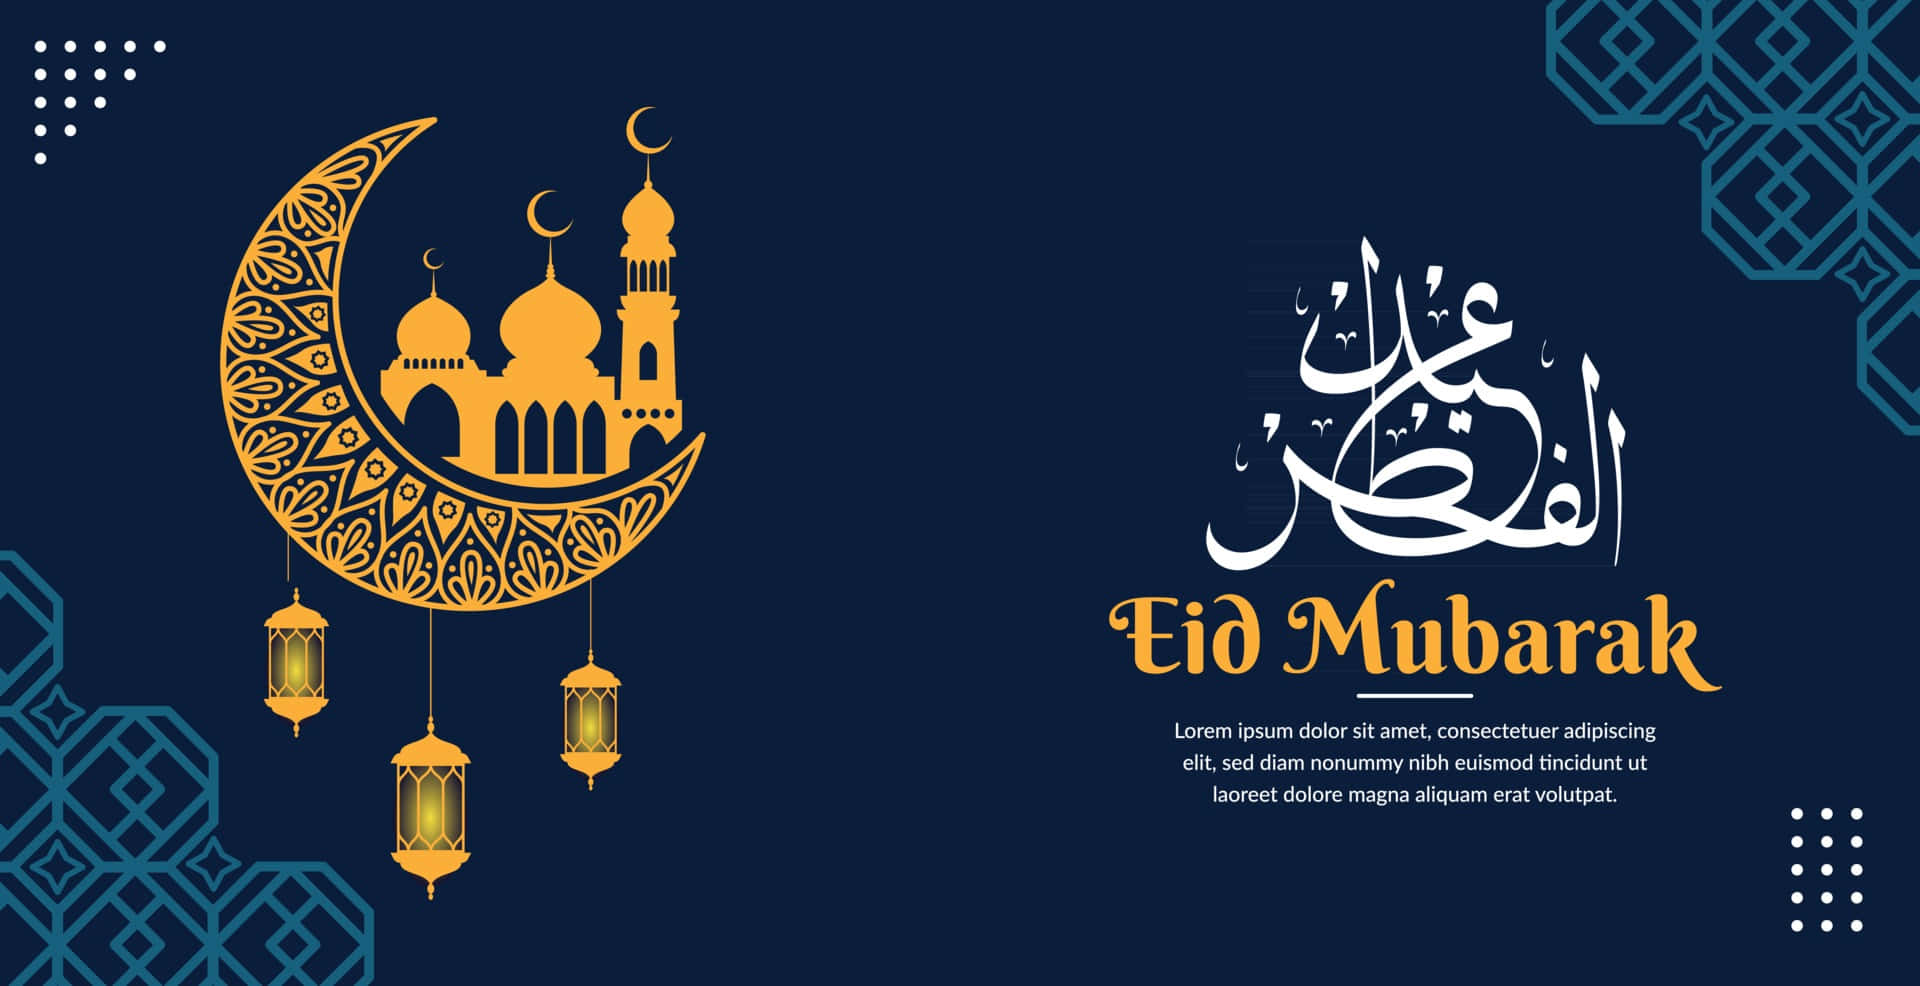 Celebrating Eid Mubarak with friends and family